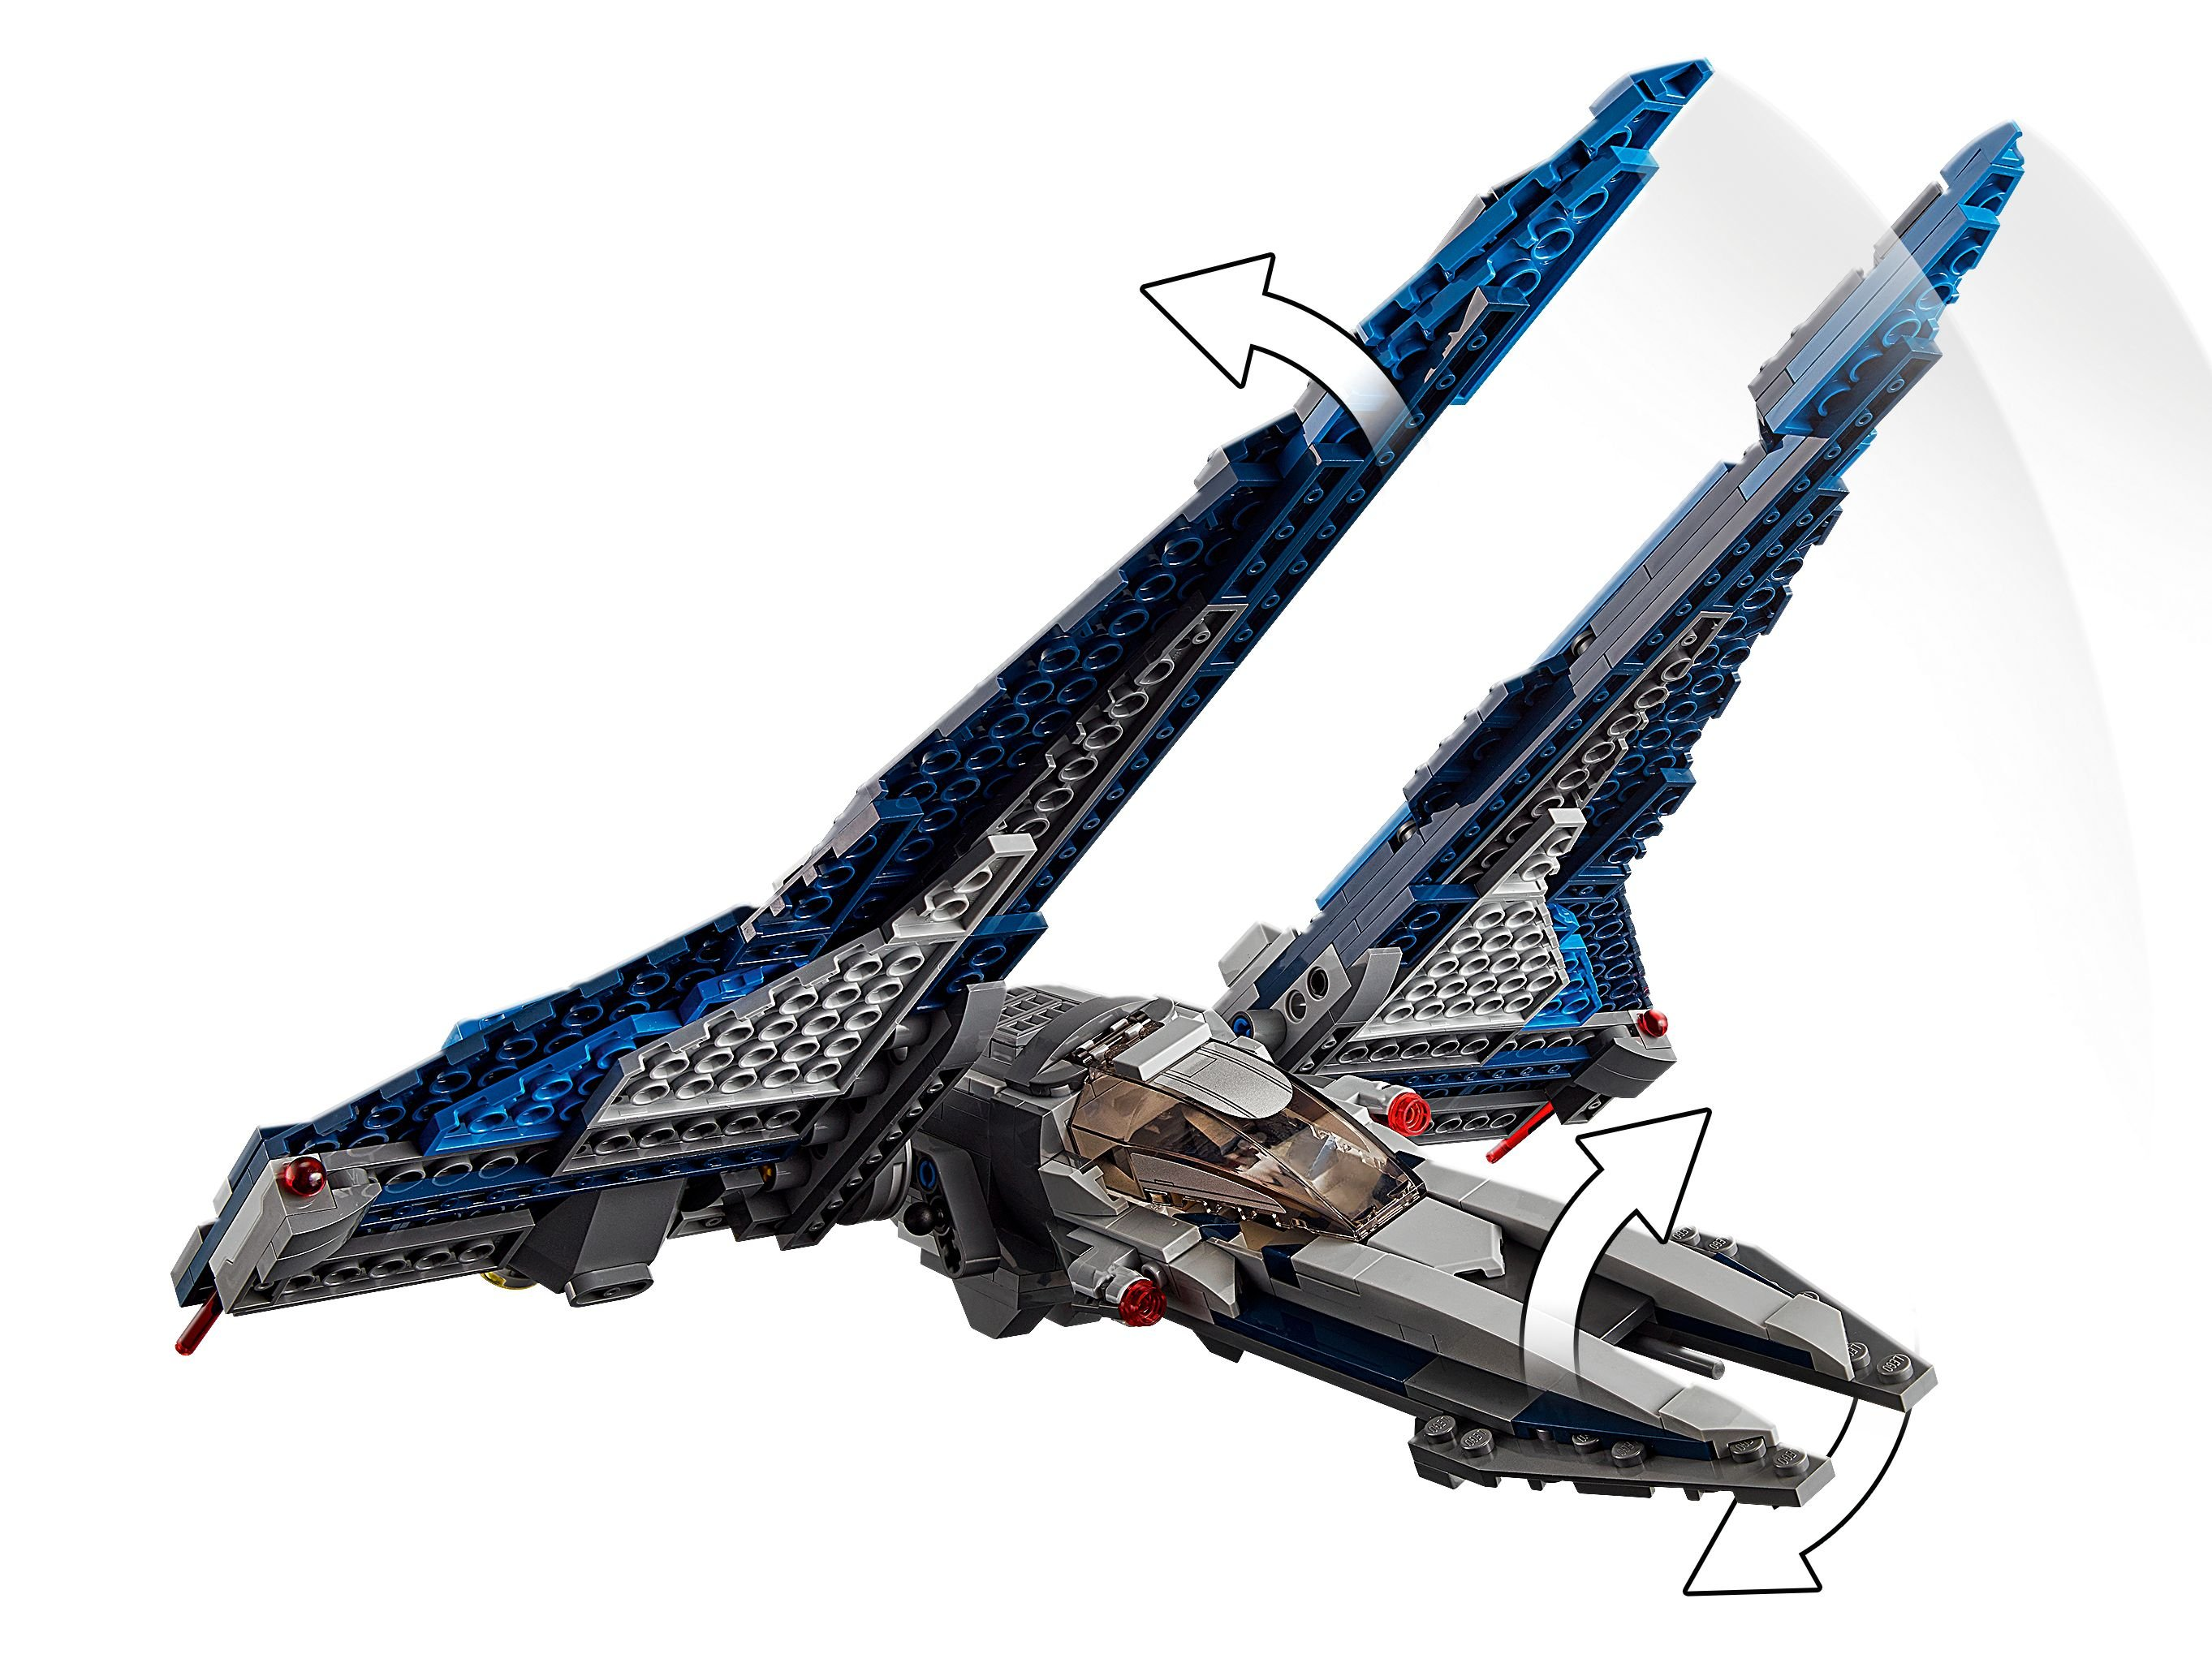 Mandalorian 75316 Starfighter™ Bausatz LEGO